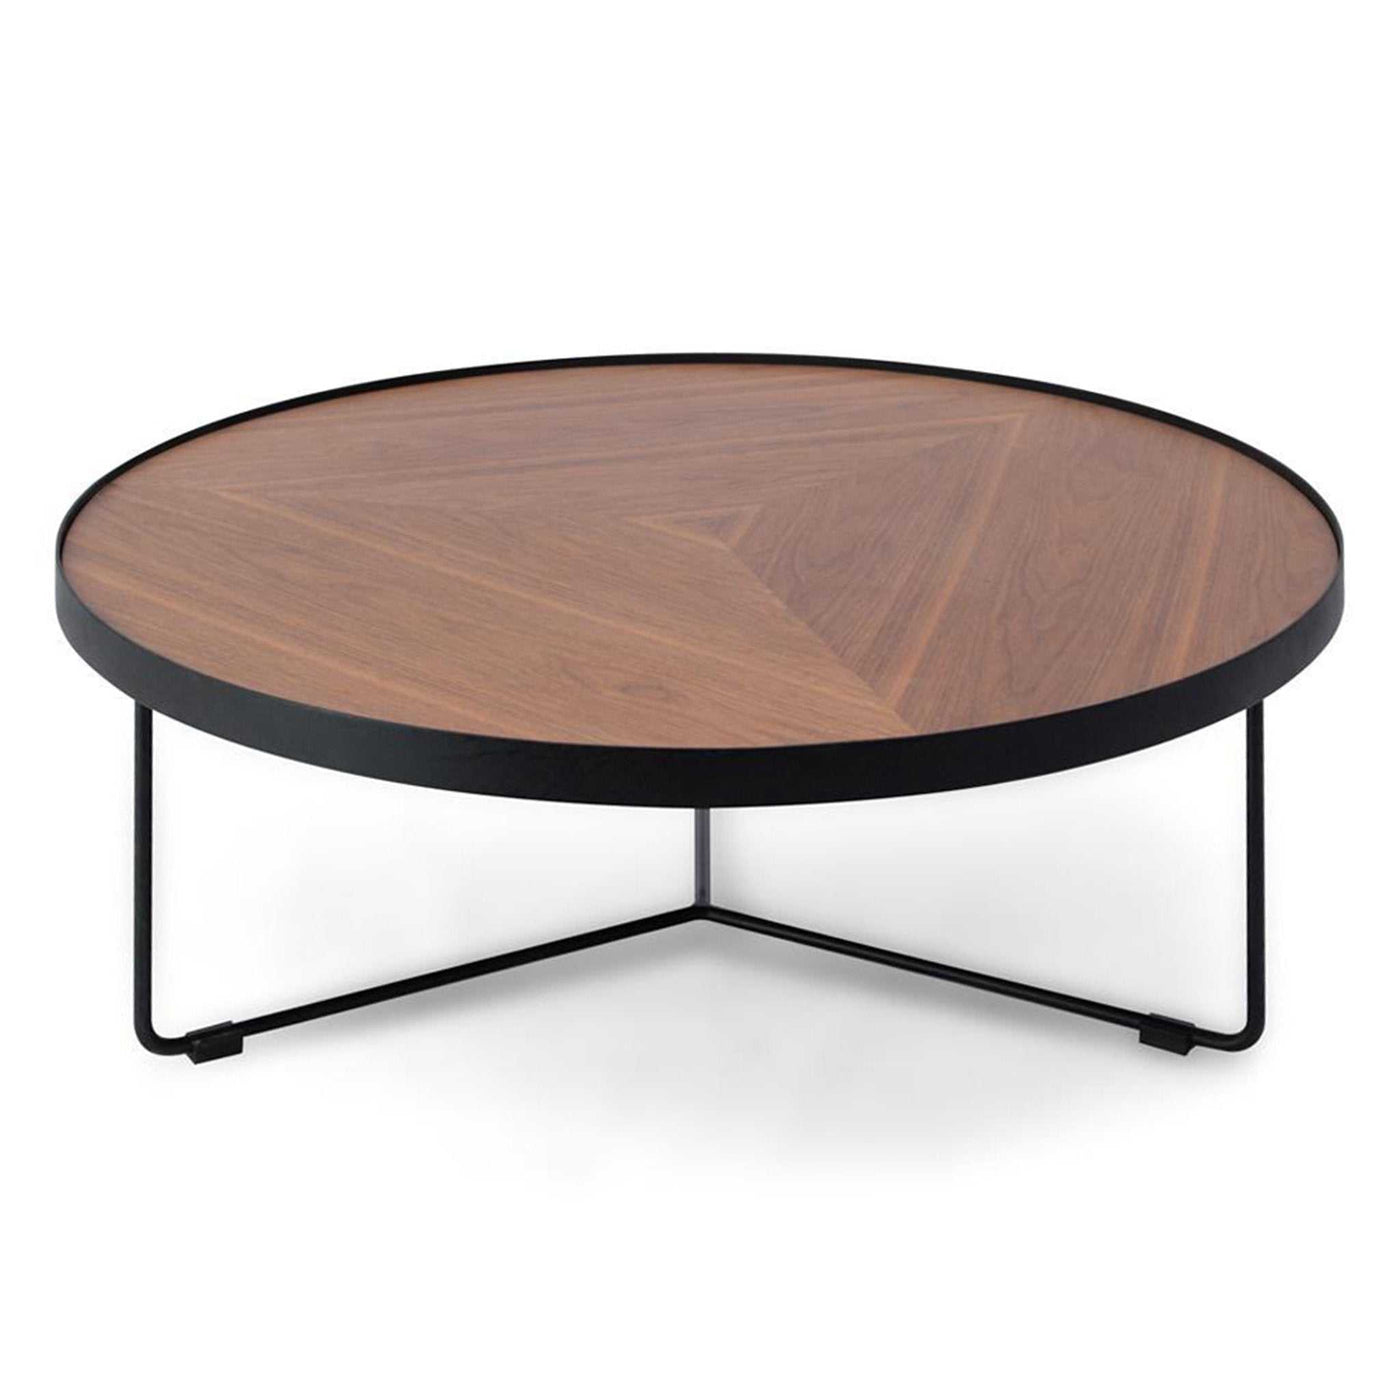 Round Coffee Table - Walnut Top - Black Frame